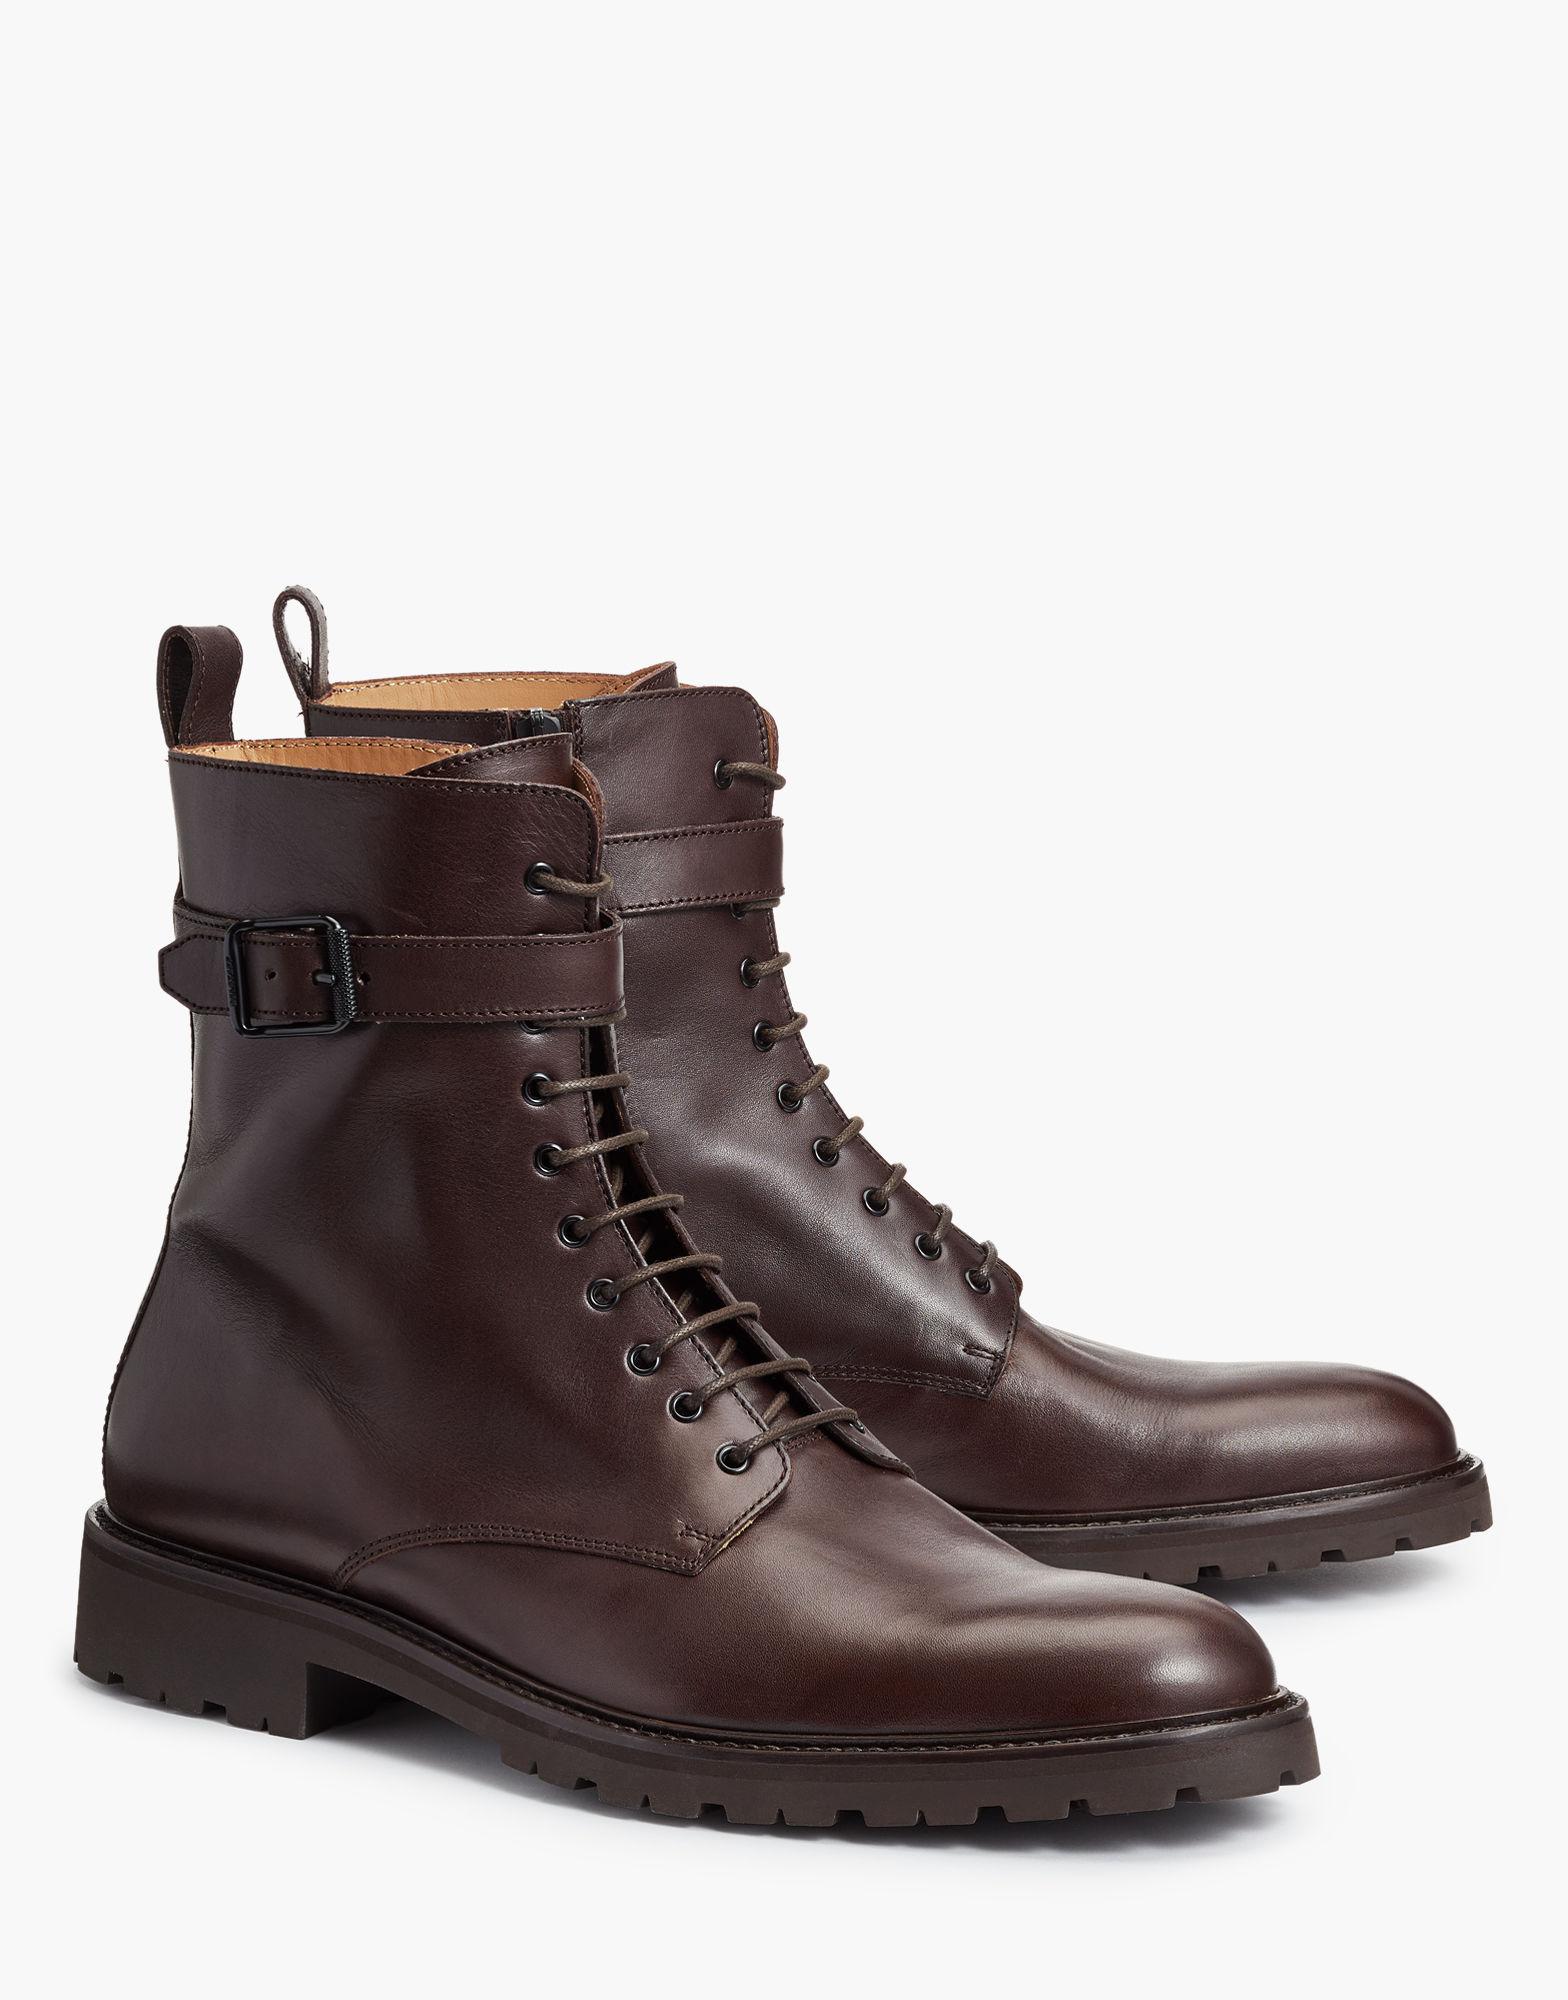 Belstaff Leather Paddington Boots in Dark Brown (Brown) for Men - Lyst